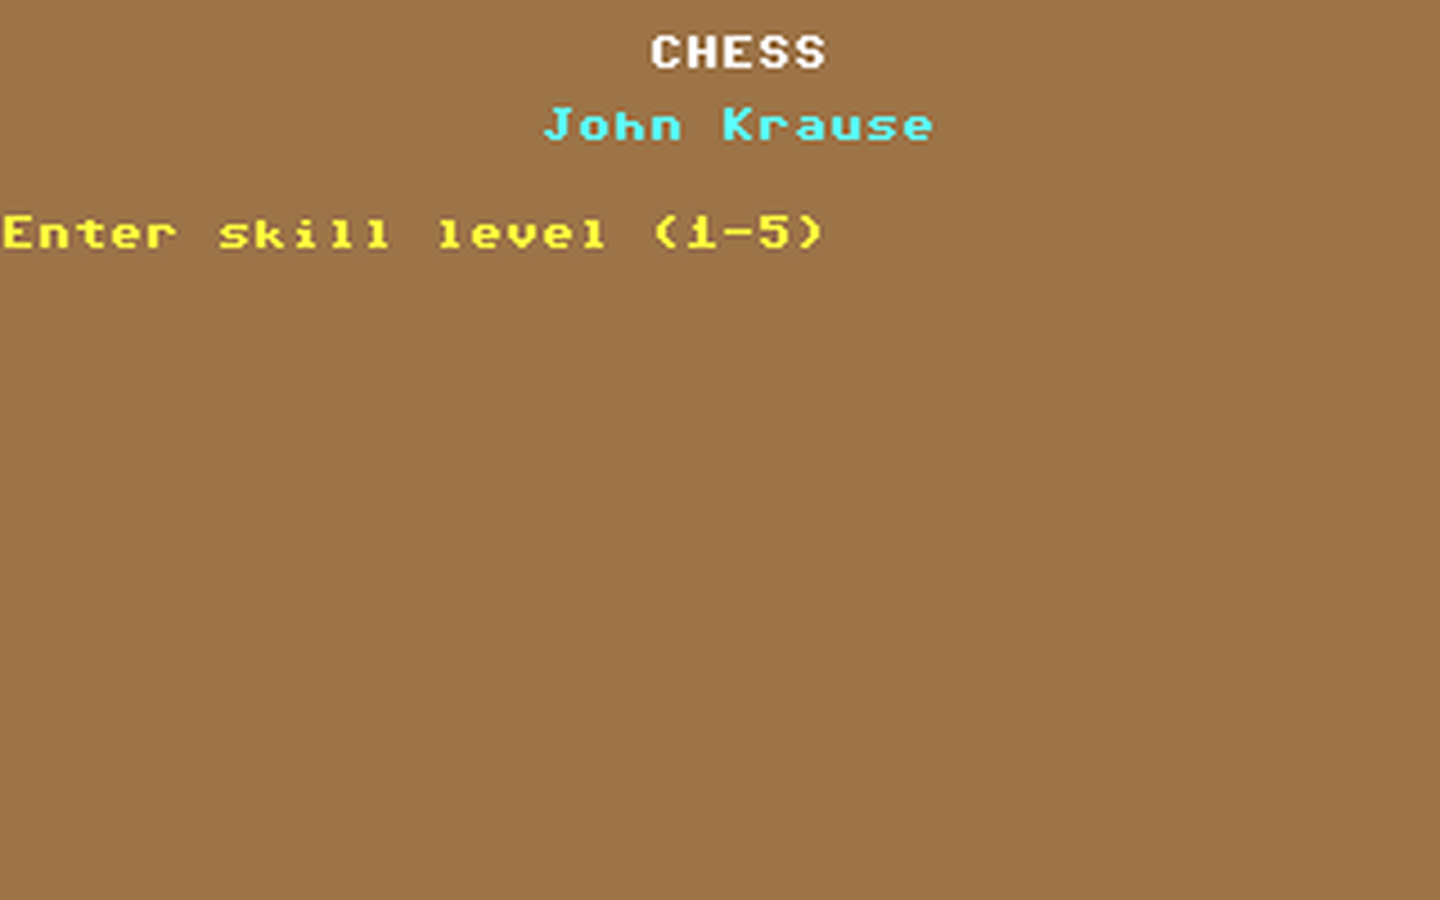 C64 GameBase Chess COMPUTE!_Publications,_Inc./COMPUTE! 1984